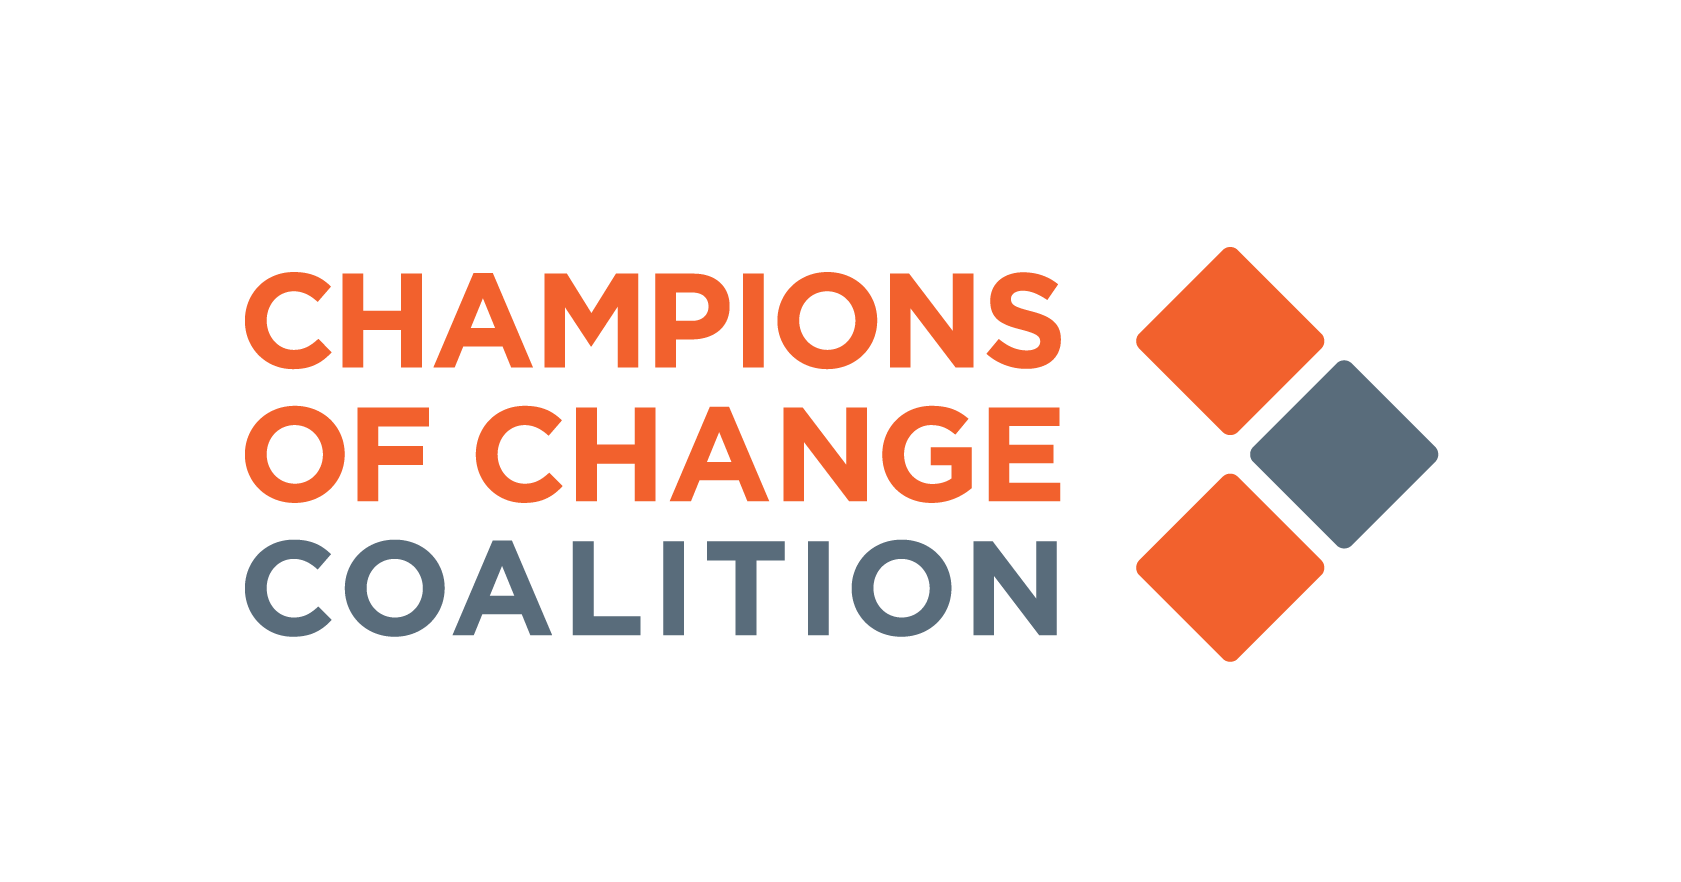  Champions of Change Coalition logo